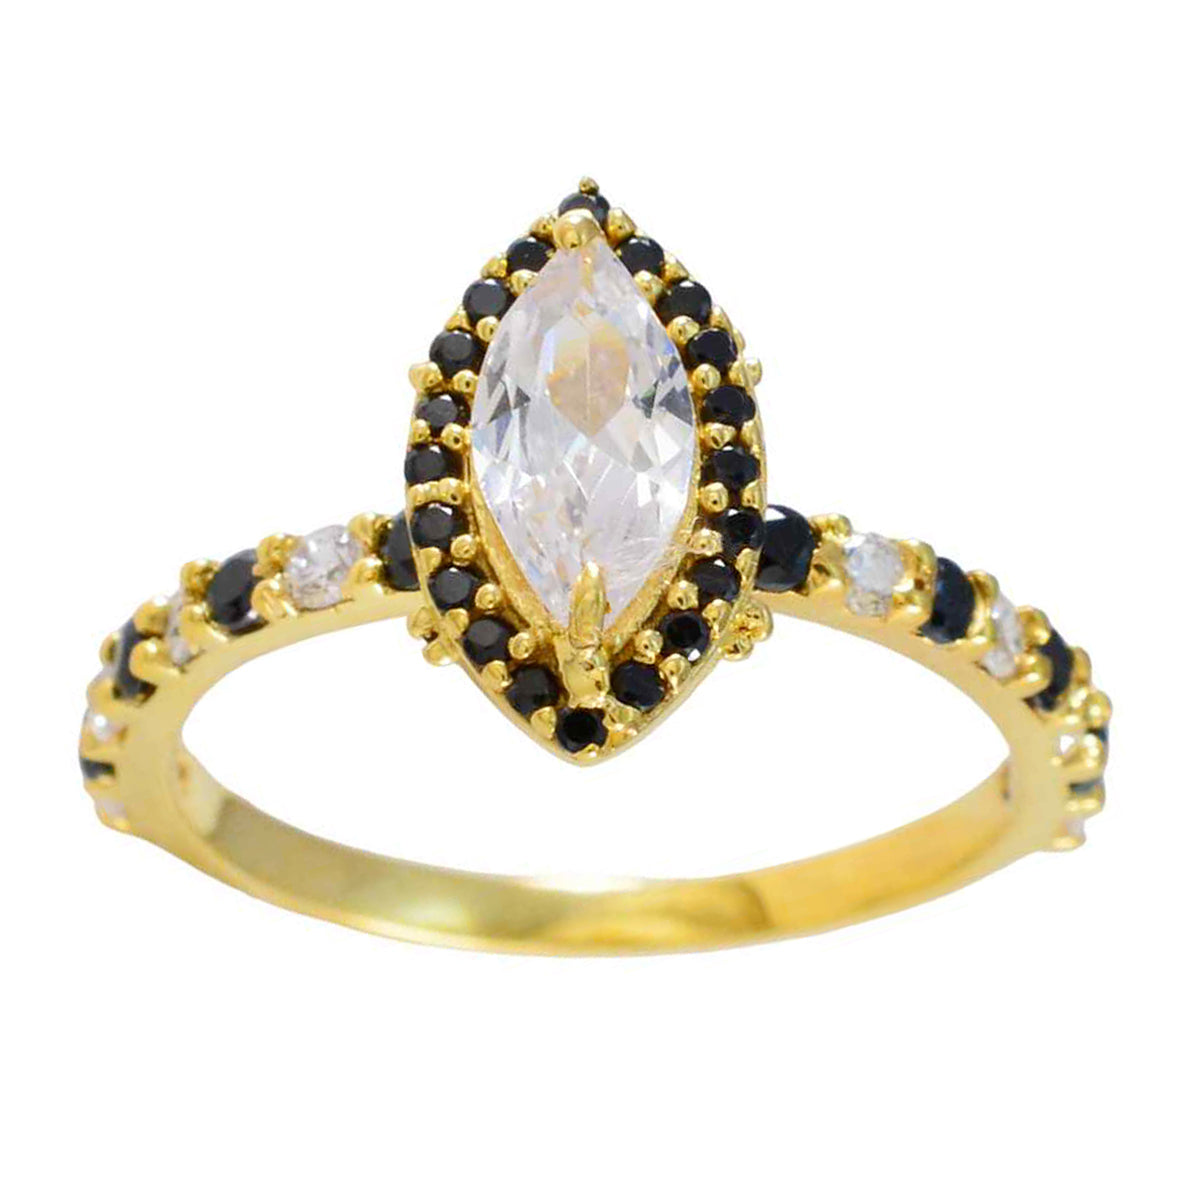 Riyo Prachtige zilveren ring met geelgouden blauwe saffiersteen Marquise vorm Griffenzetting Antieke sieraden Verlovingsring